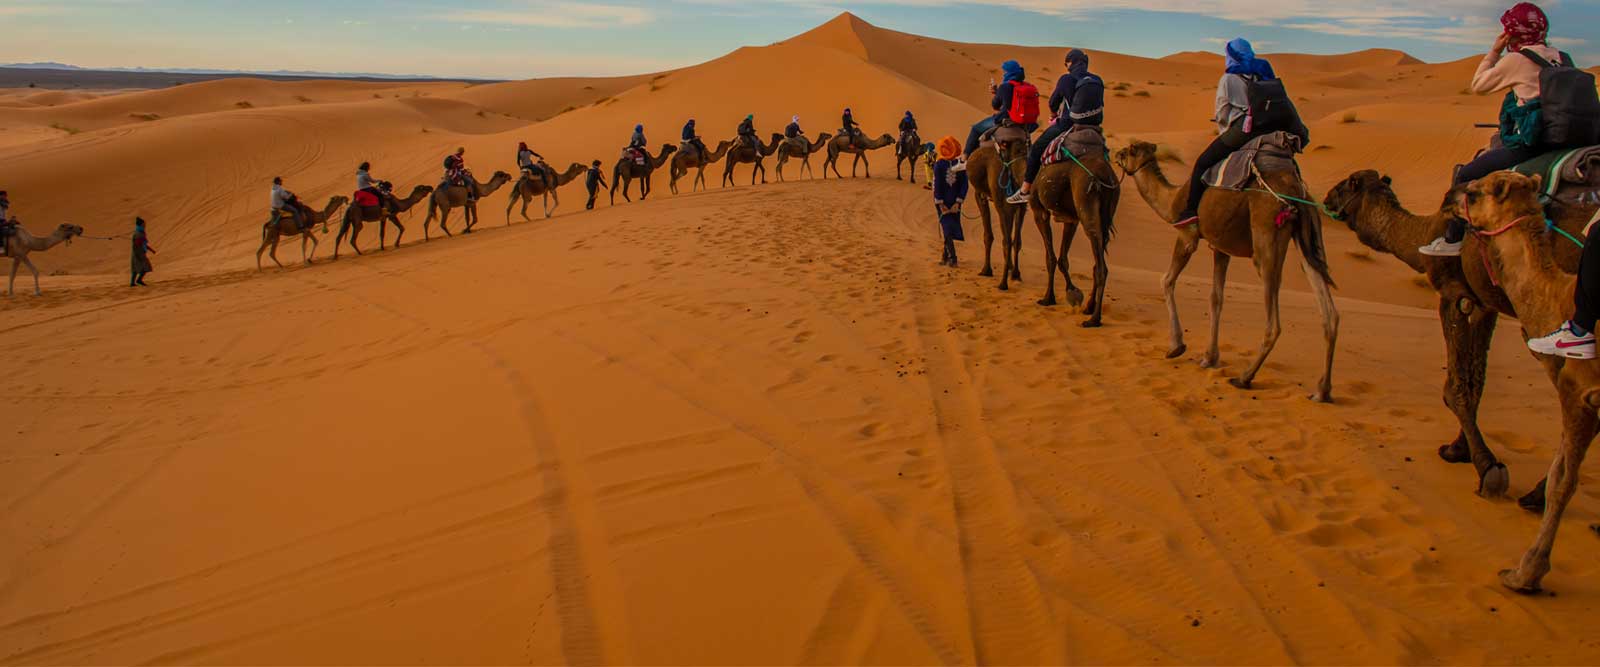 Shared Desert Tour from Marrakech to Merzouga